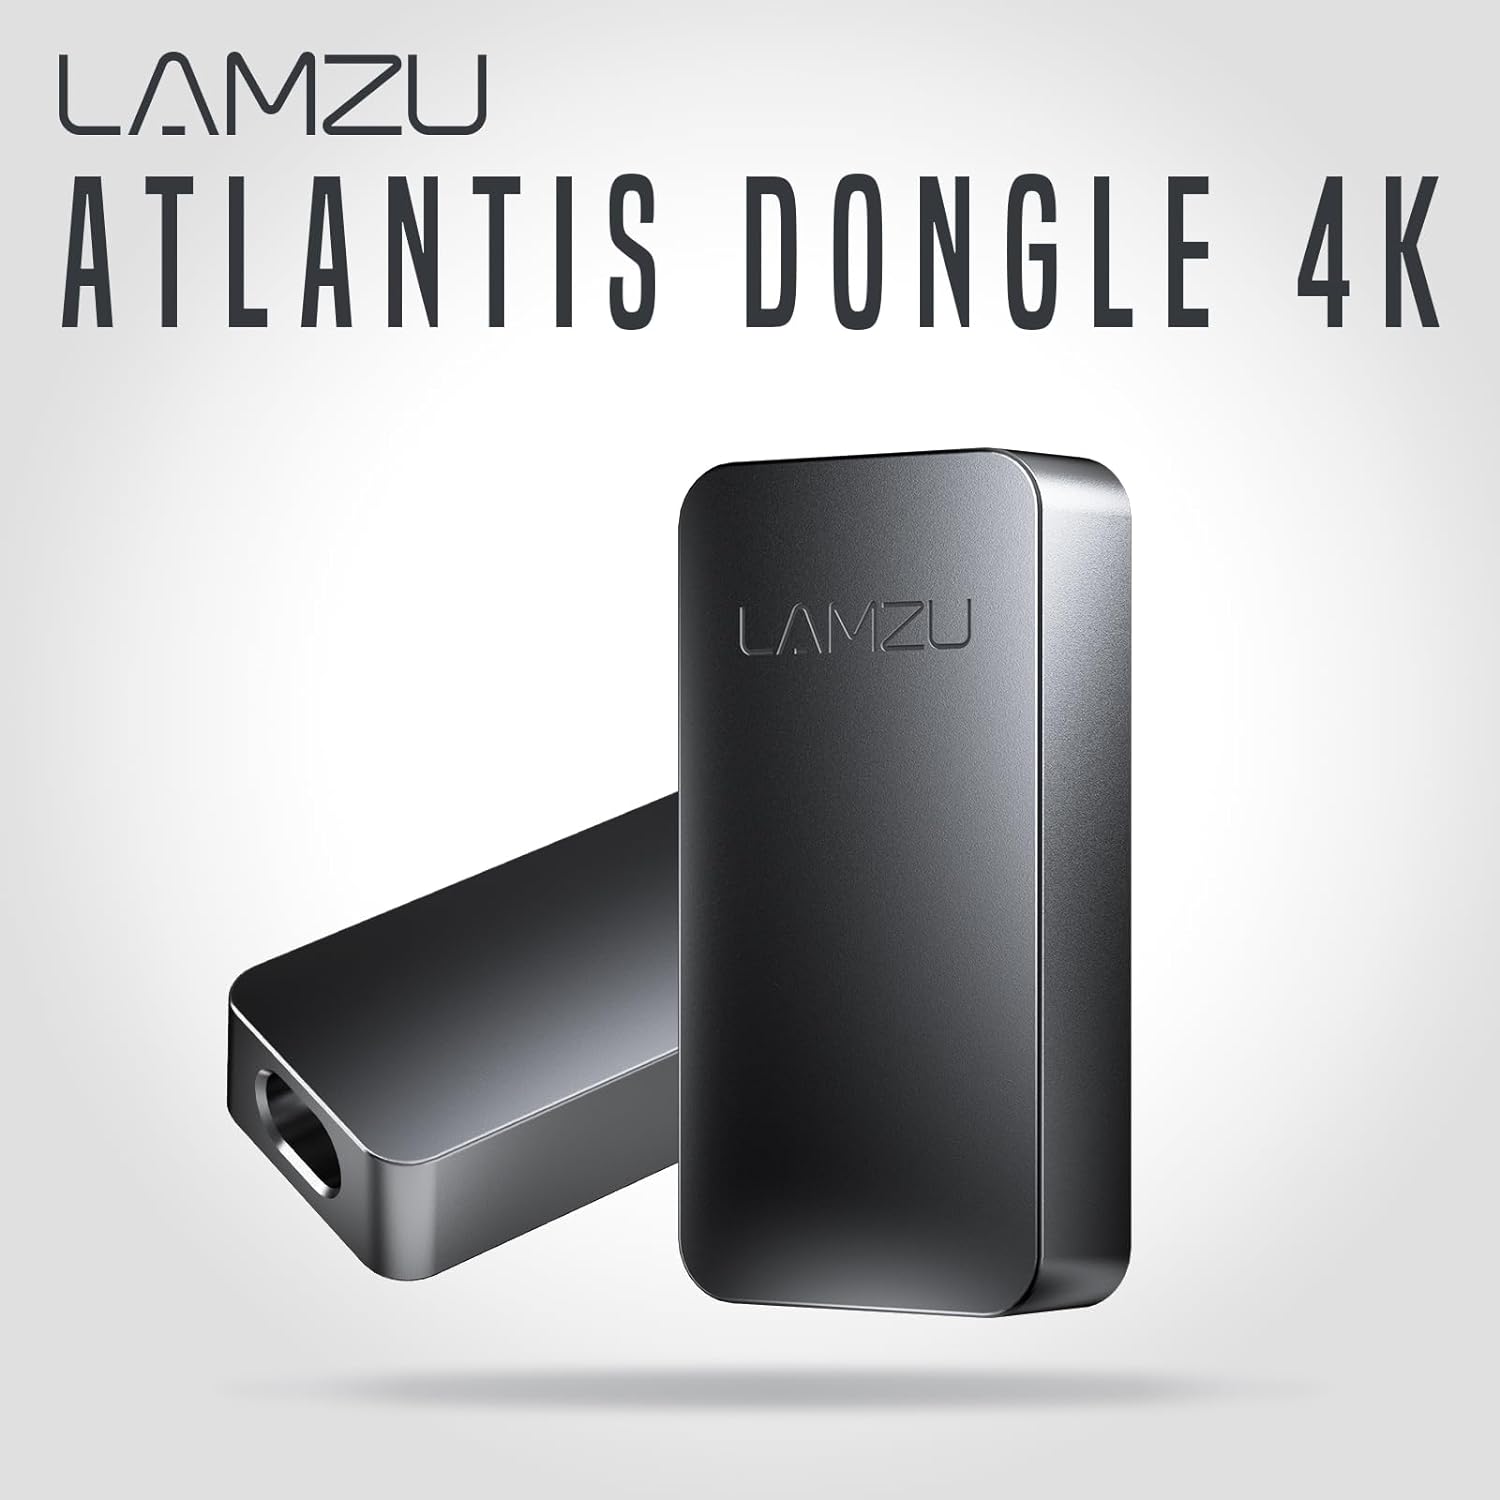 Lamzu 4K Hz Dongle Polling Rate Gaming Mouse for Atlantis, Maya, Thorn